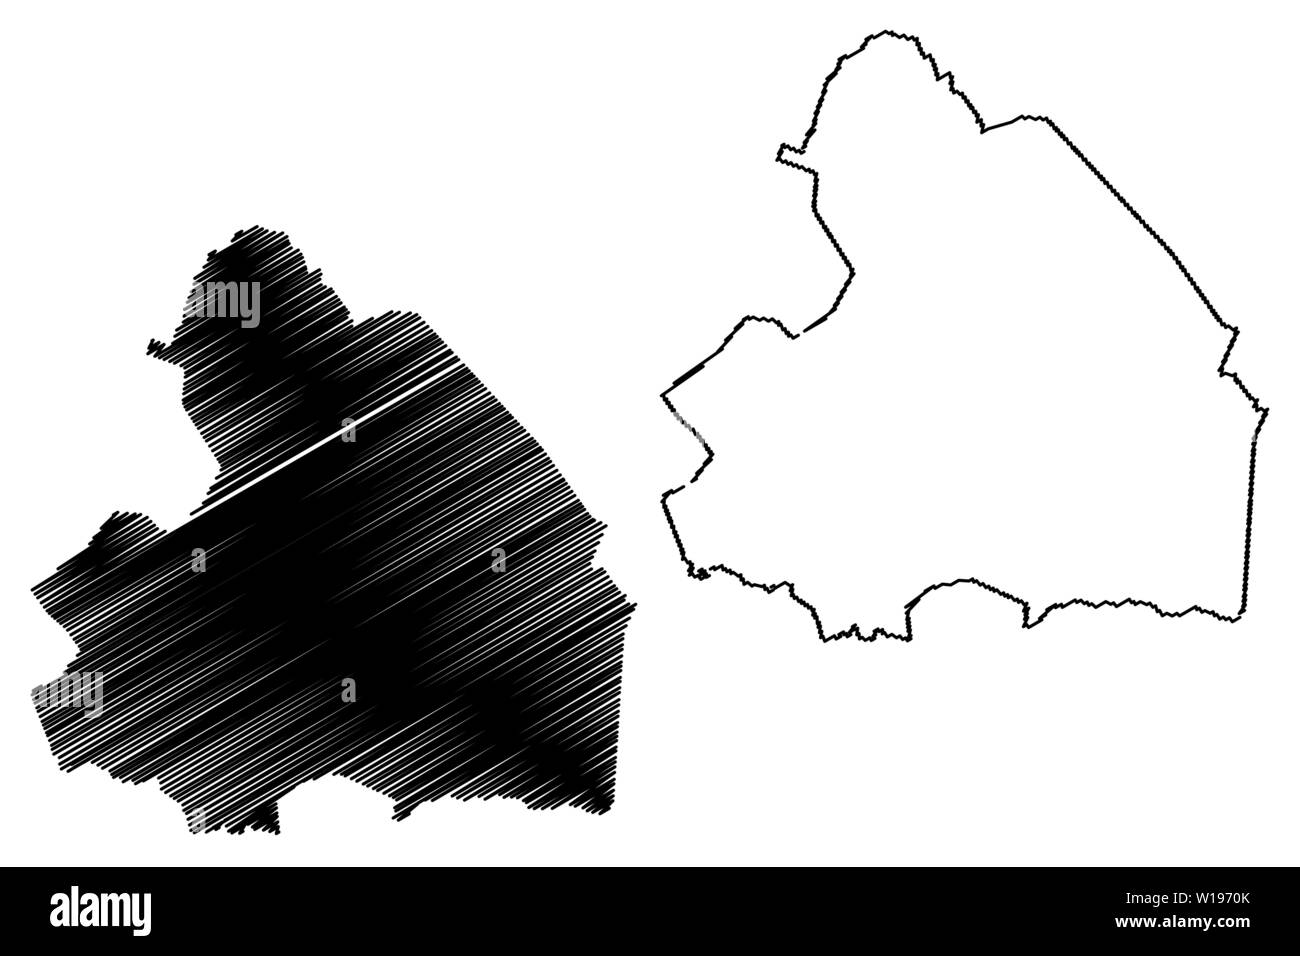 Provinz Drenthe (Königreich der Niederlande, Holland) Karte Vektor-illustration, kritzeln Skizze Drenthe Karte Stock Vektor